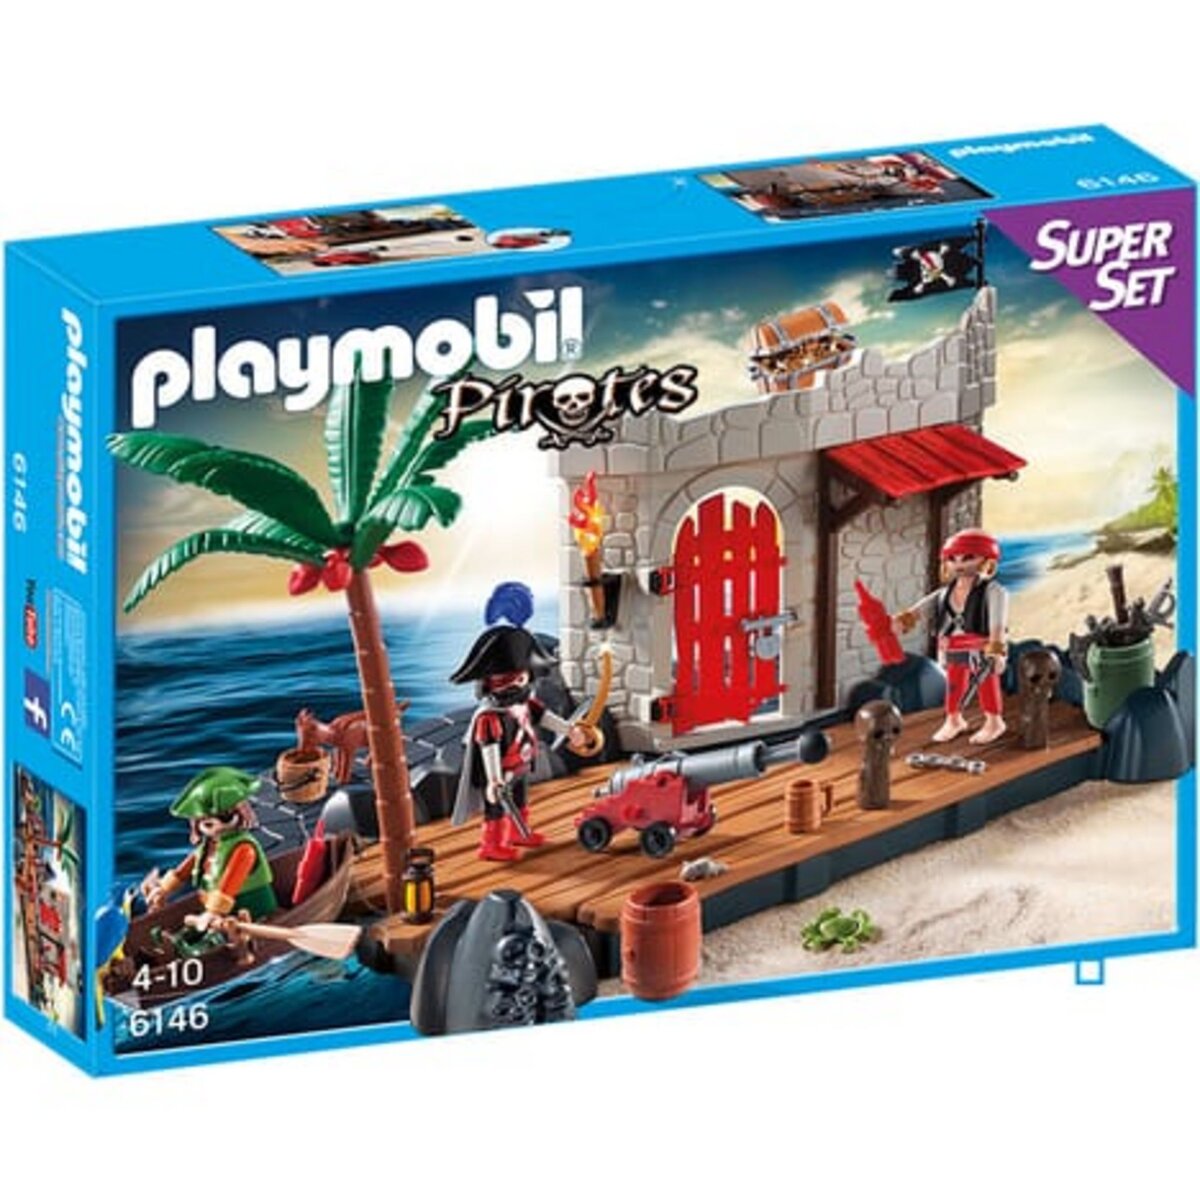 PLAYMOBIL 6146 - Superset ilôt des pirates